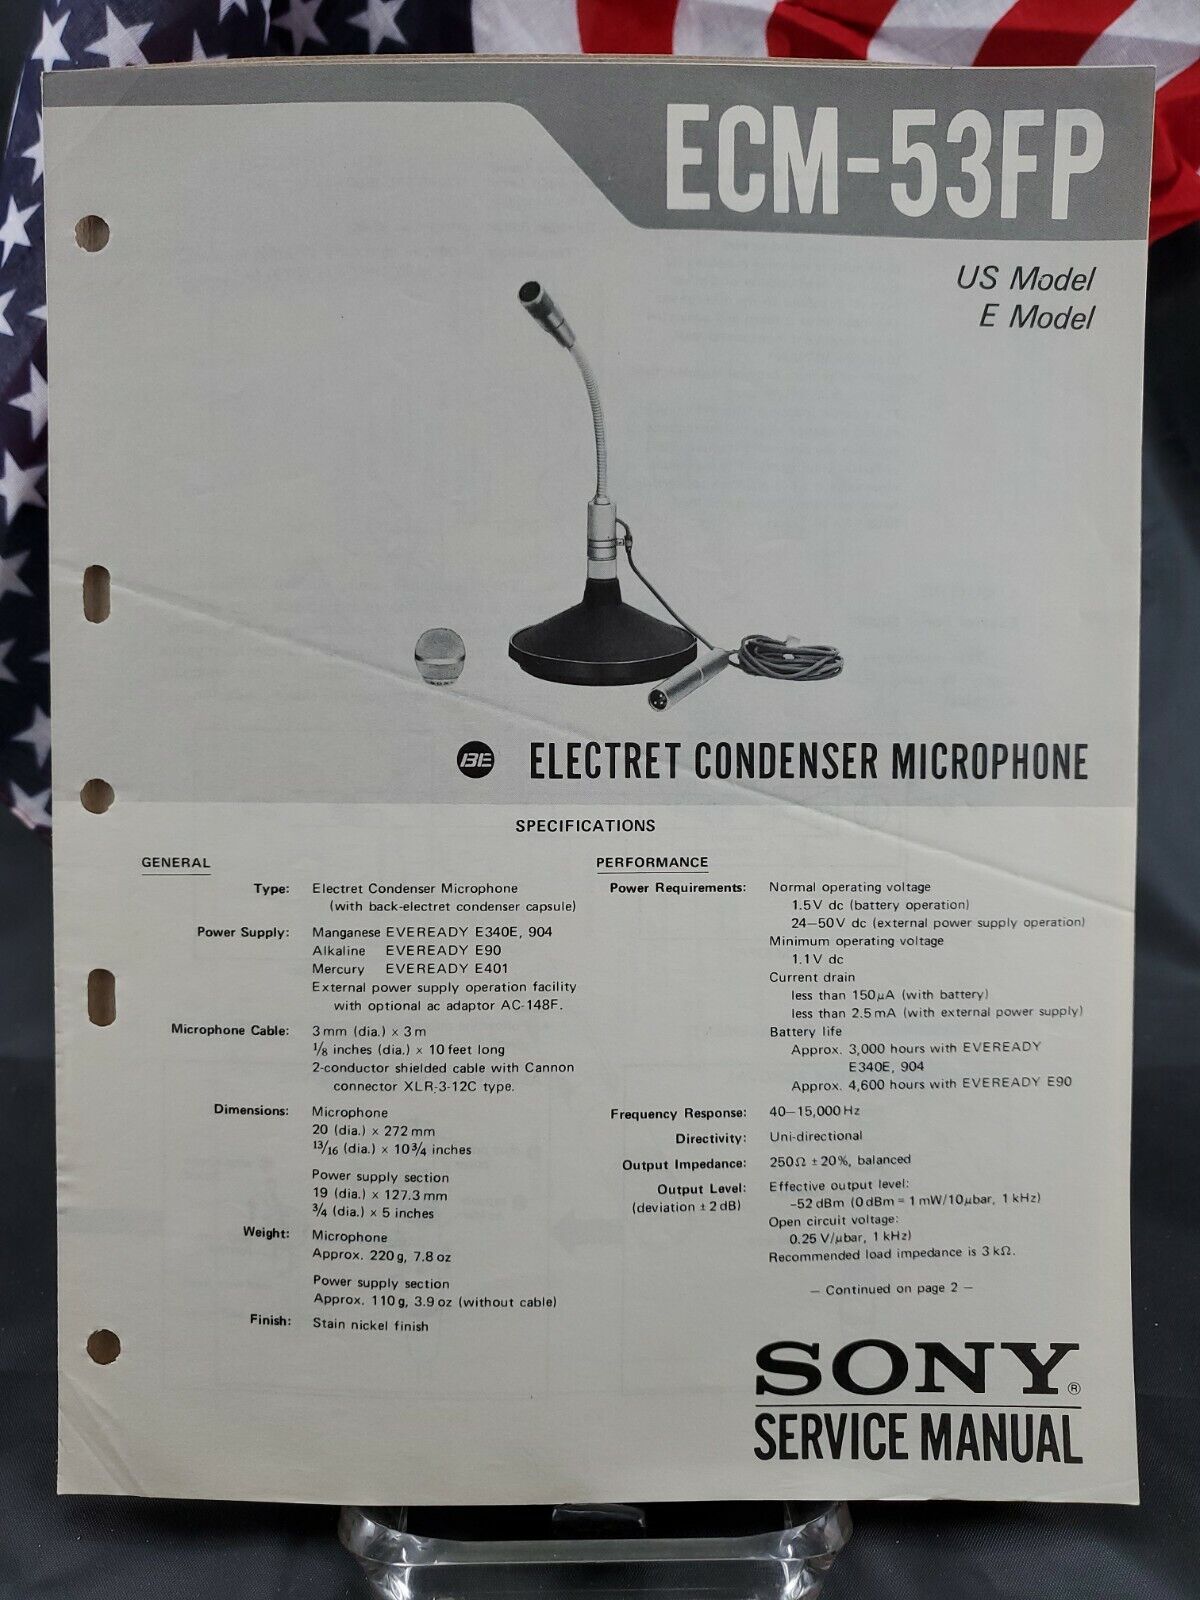 Original Sony Service Manual 1978 Electret Condenser Microphone ECM-53FP